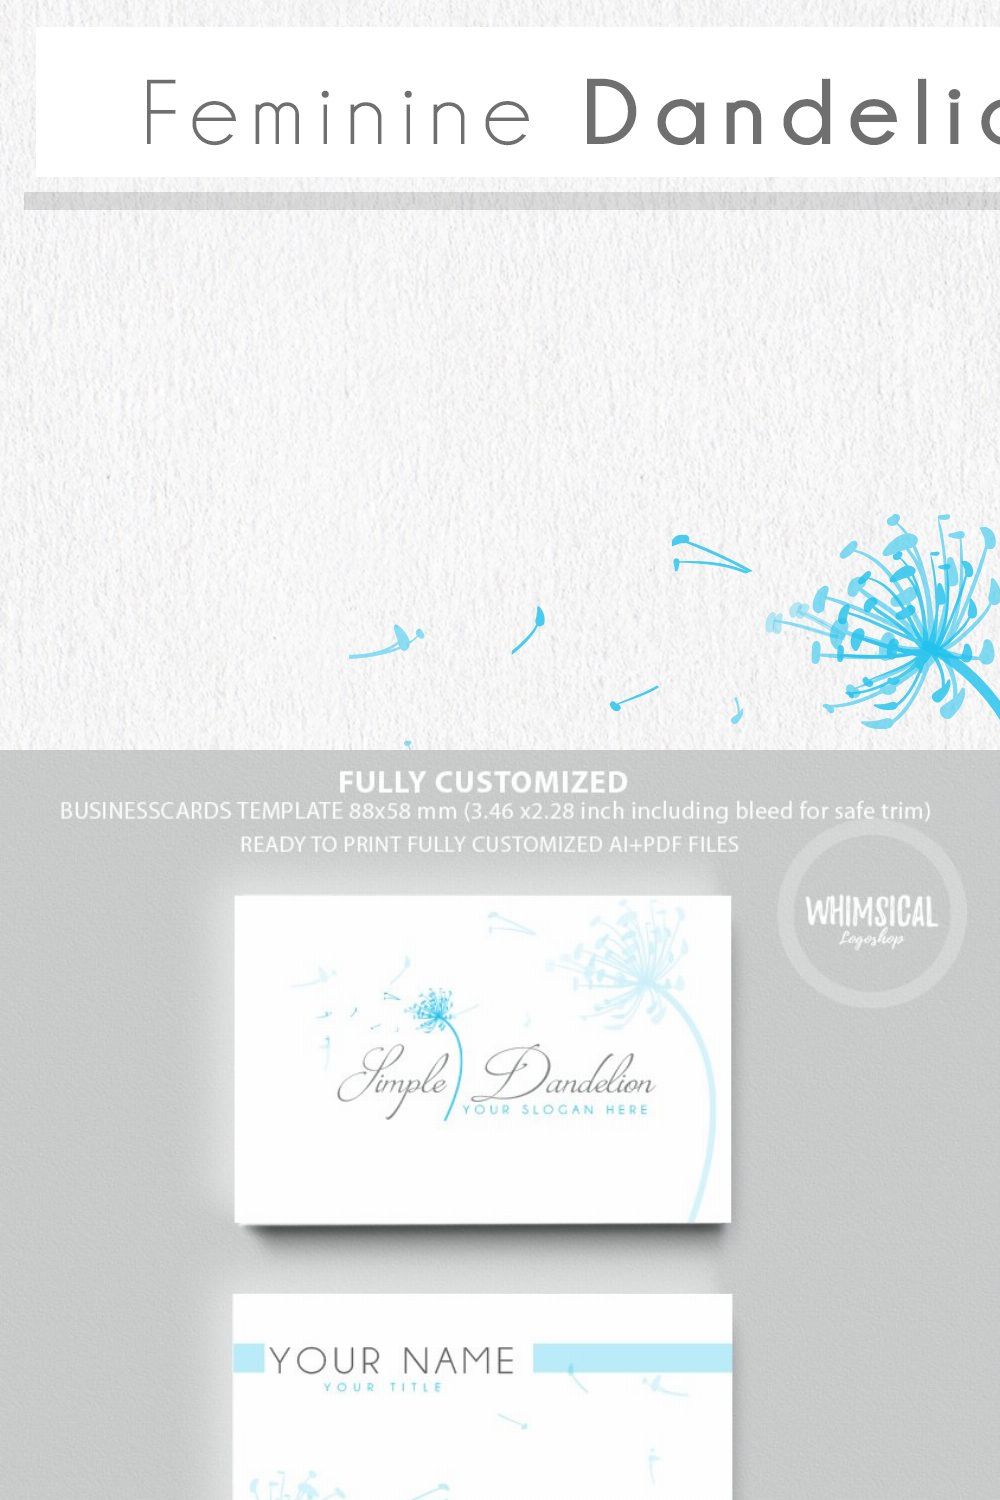 Feminine Dandelion logo businesscard pinterest preview image.